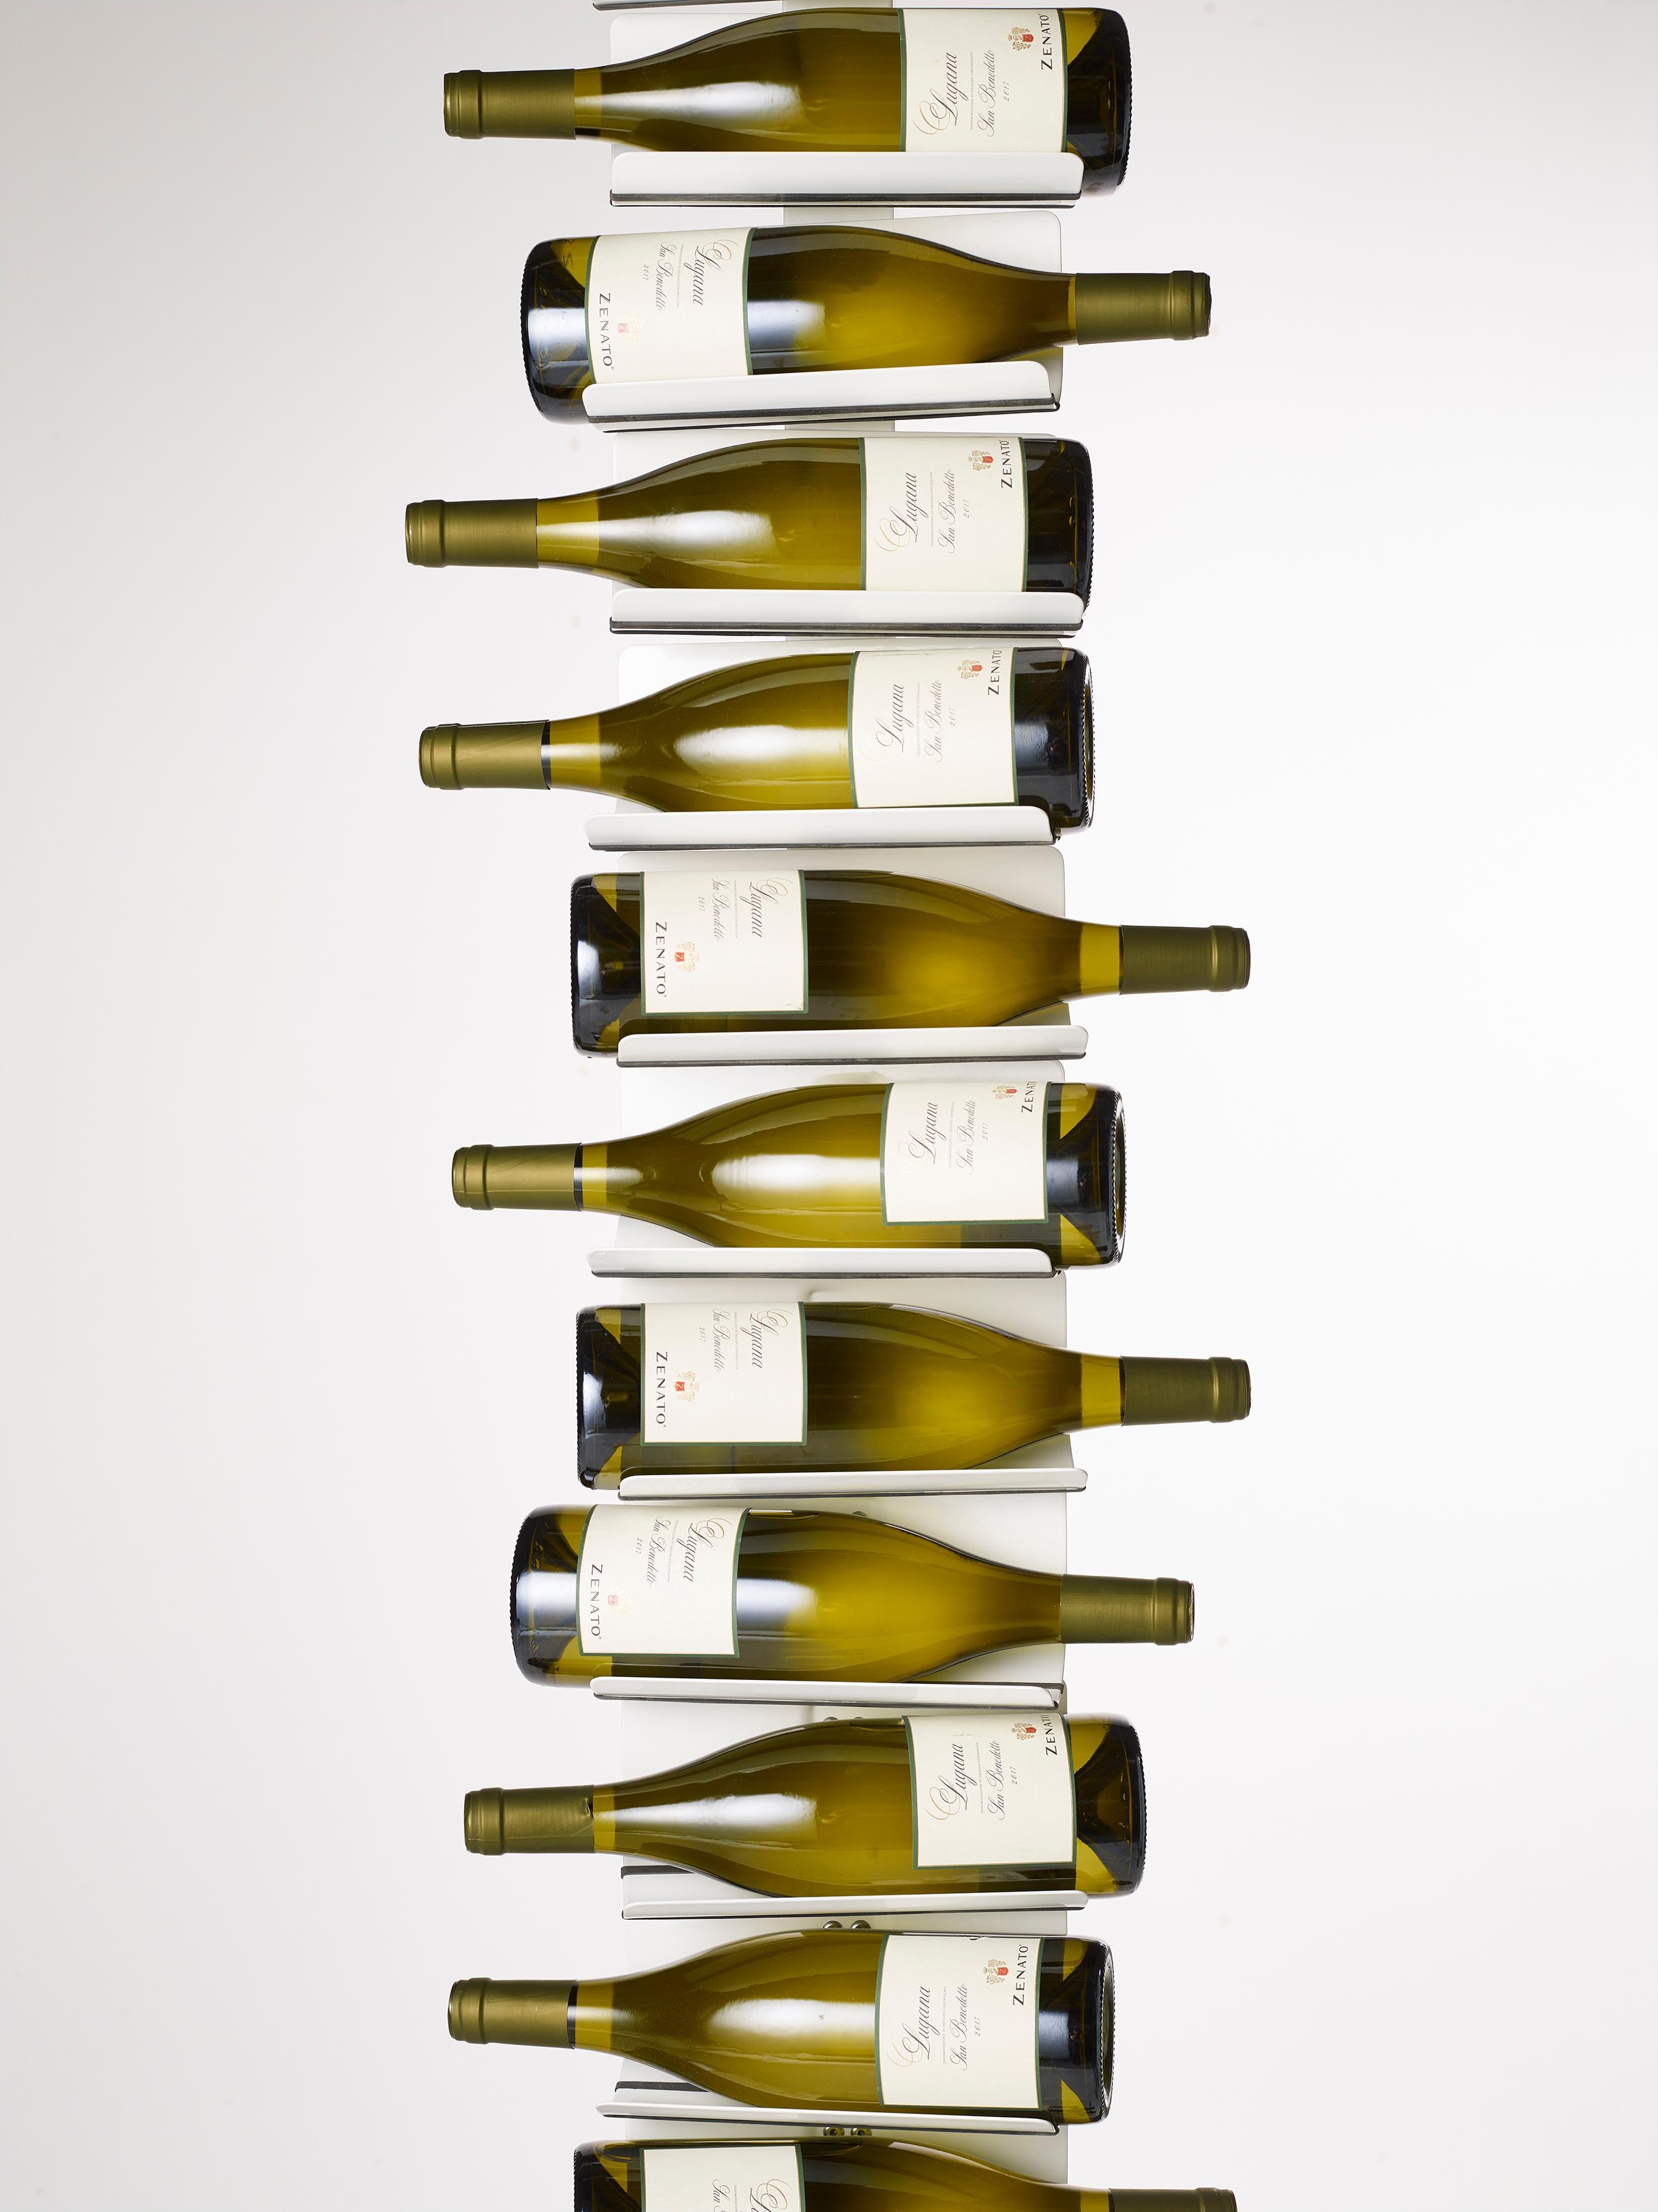 En vente : White Porte-bouteilles vertical Ptolomeo Vino de Opinion Ciatti, grand modèle 3